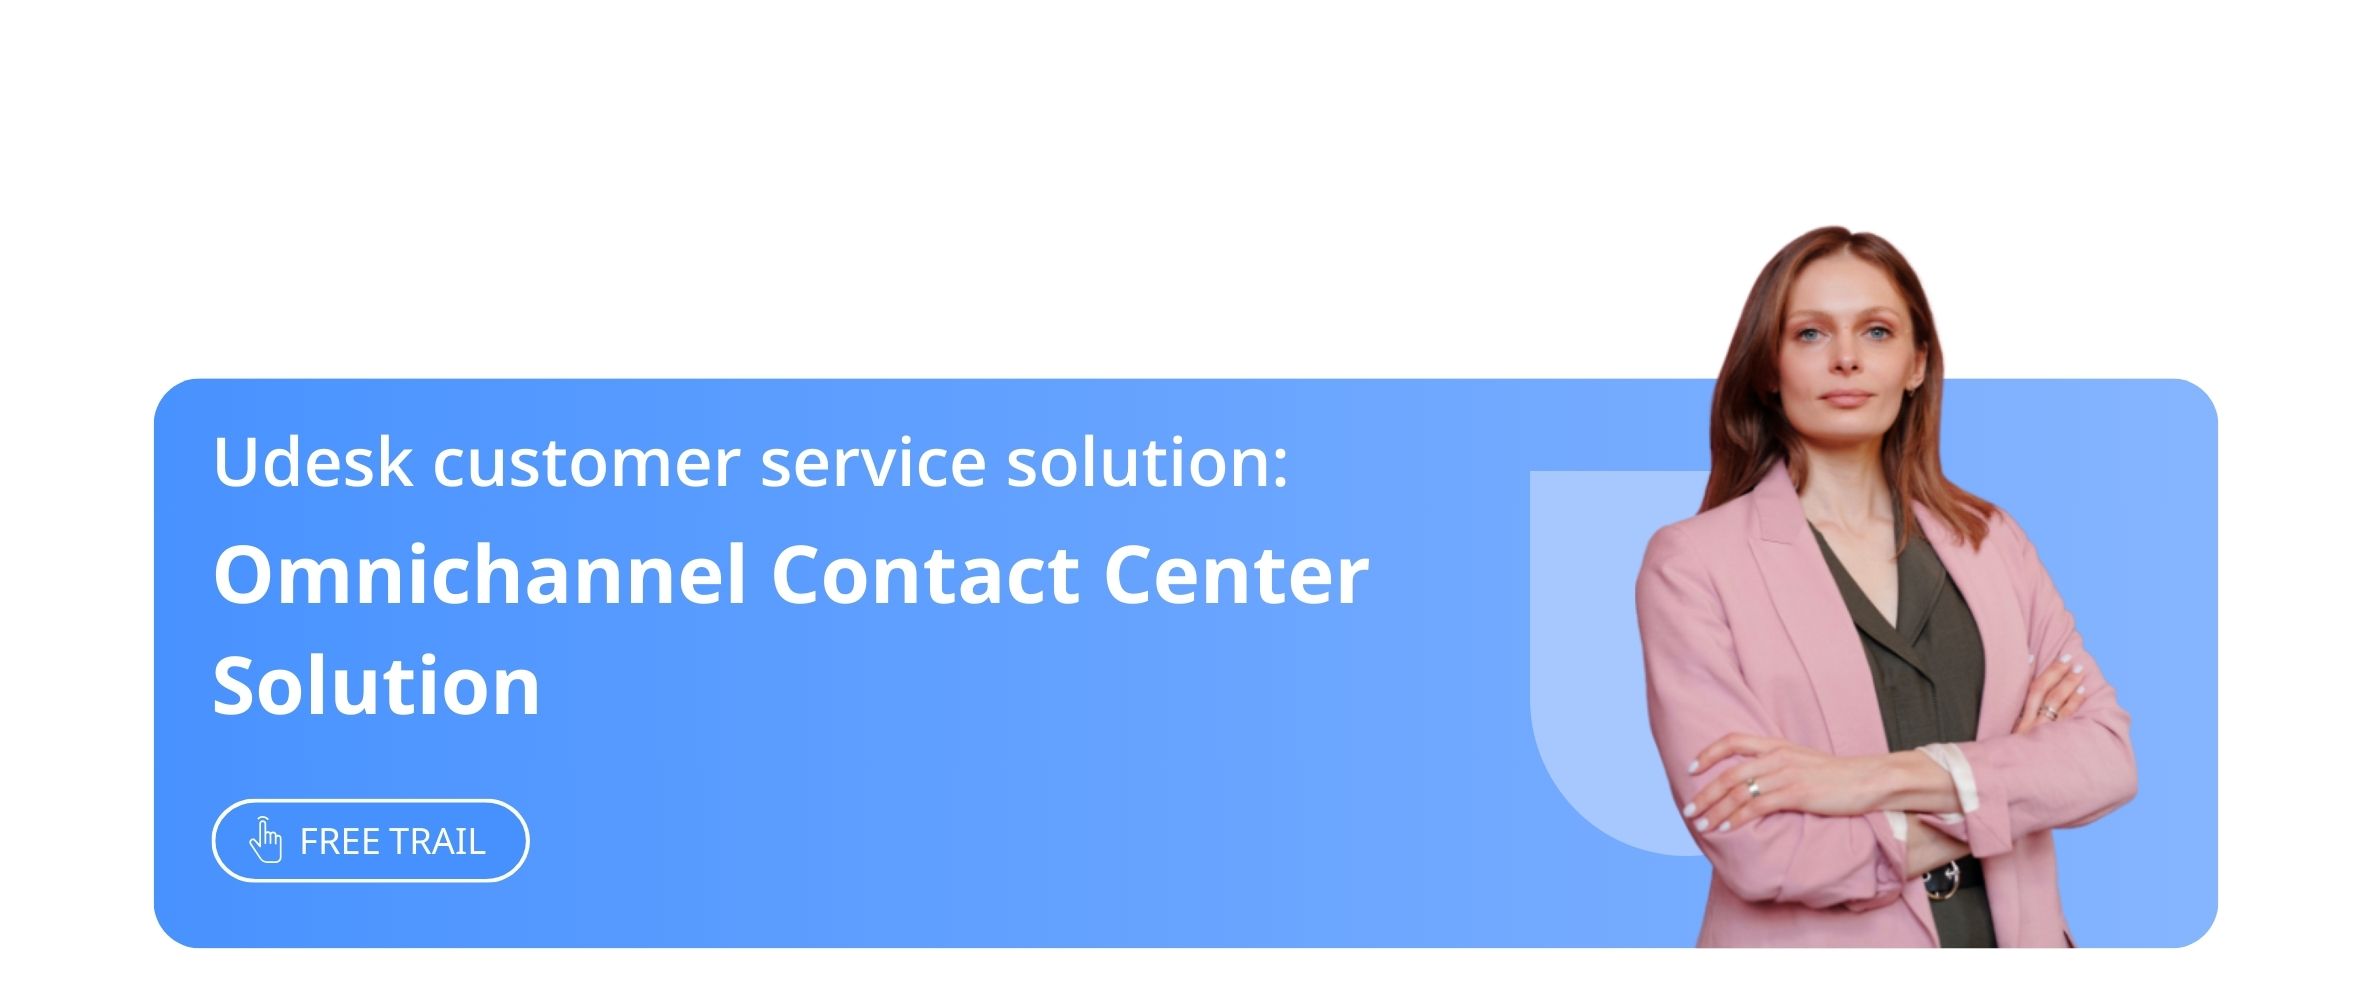 Udesk customer service solution